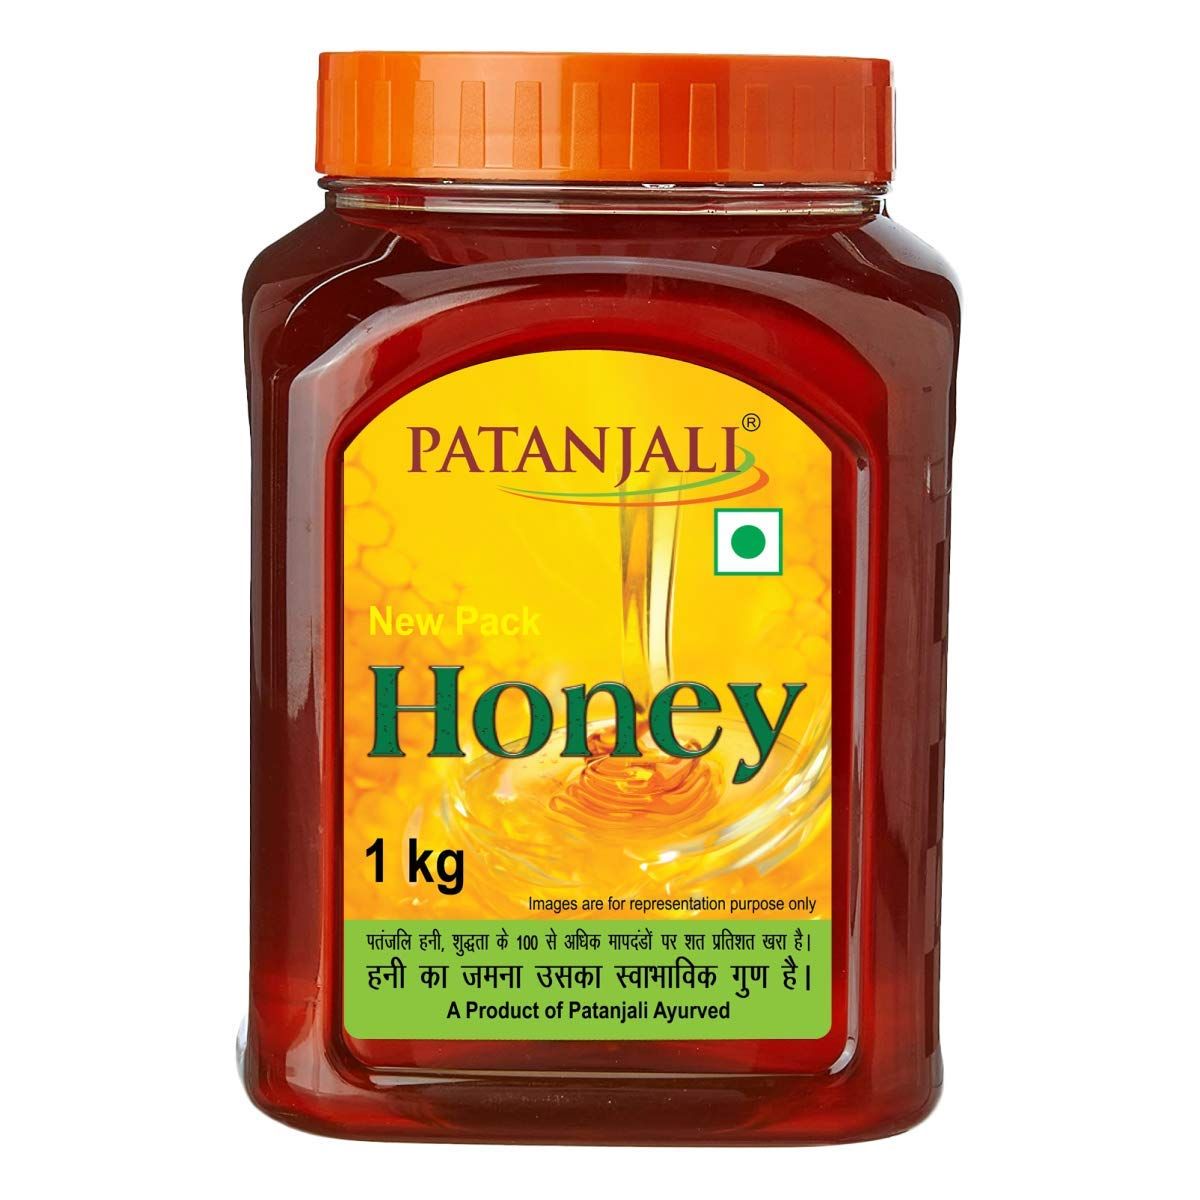 Patanjali Honey Image